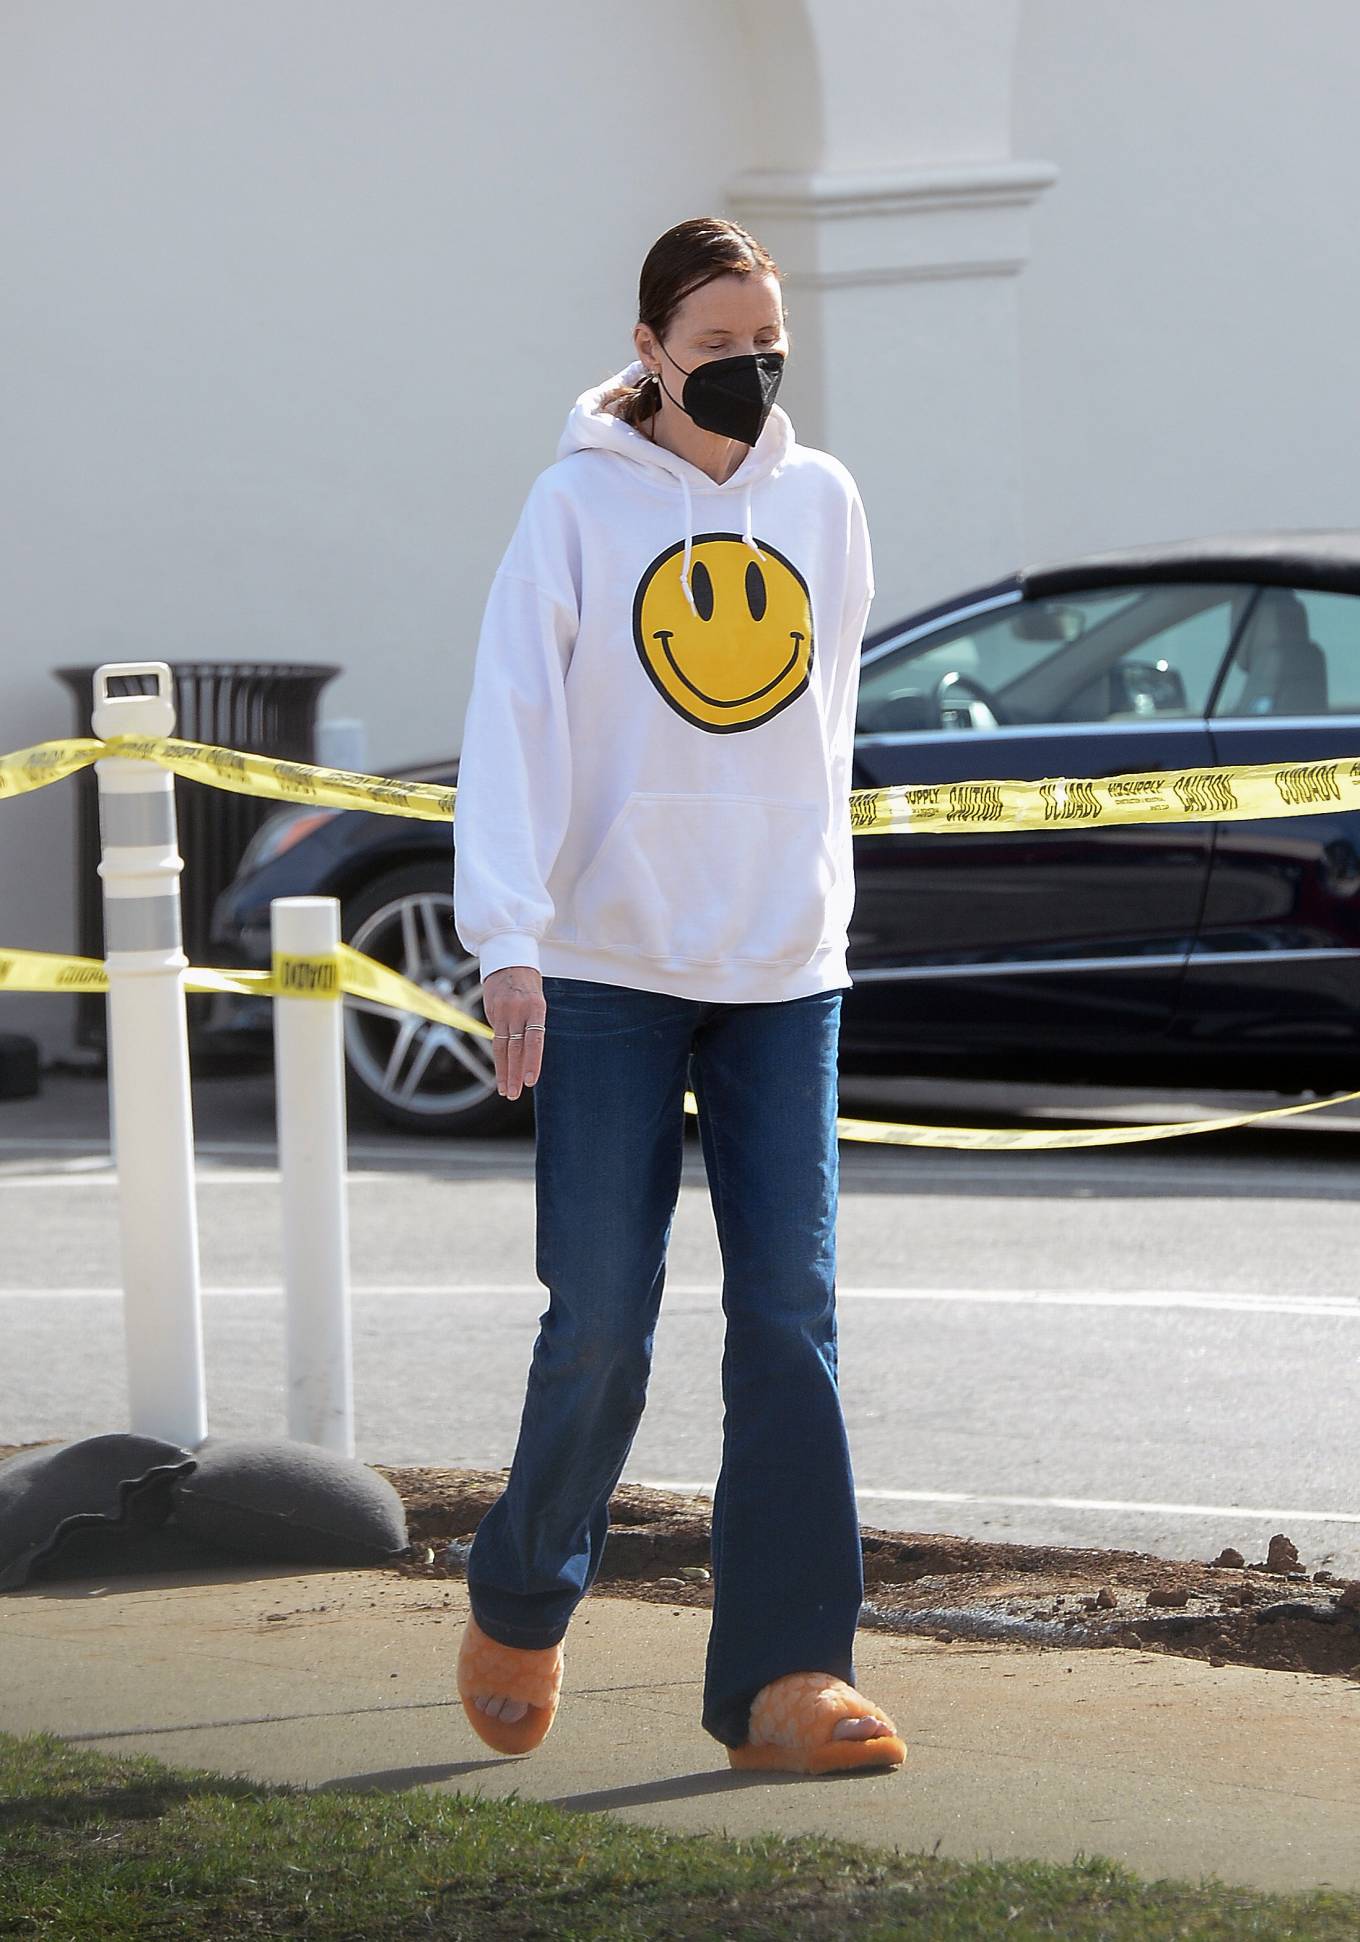 Geena Davis 2022 : Geena Davis – Run errands wearing slippers in Los Angeles-08